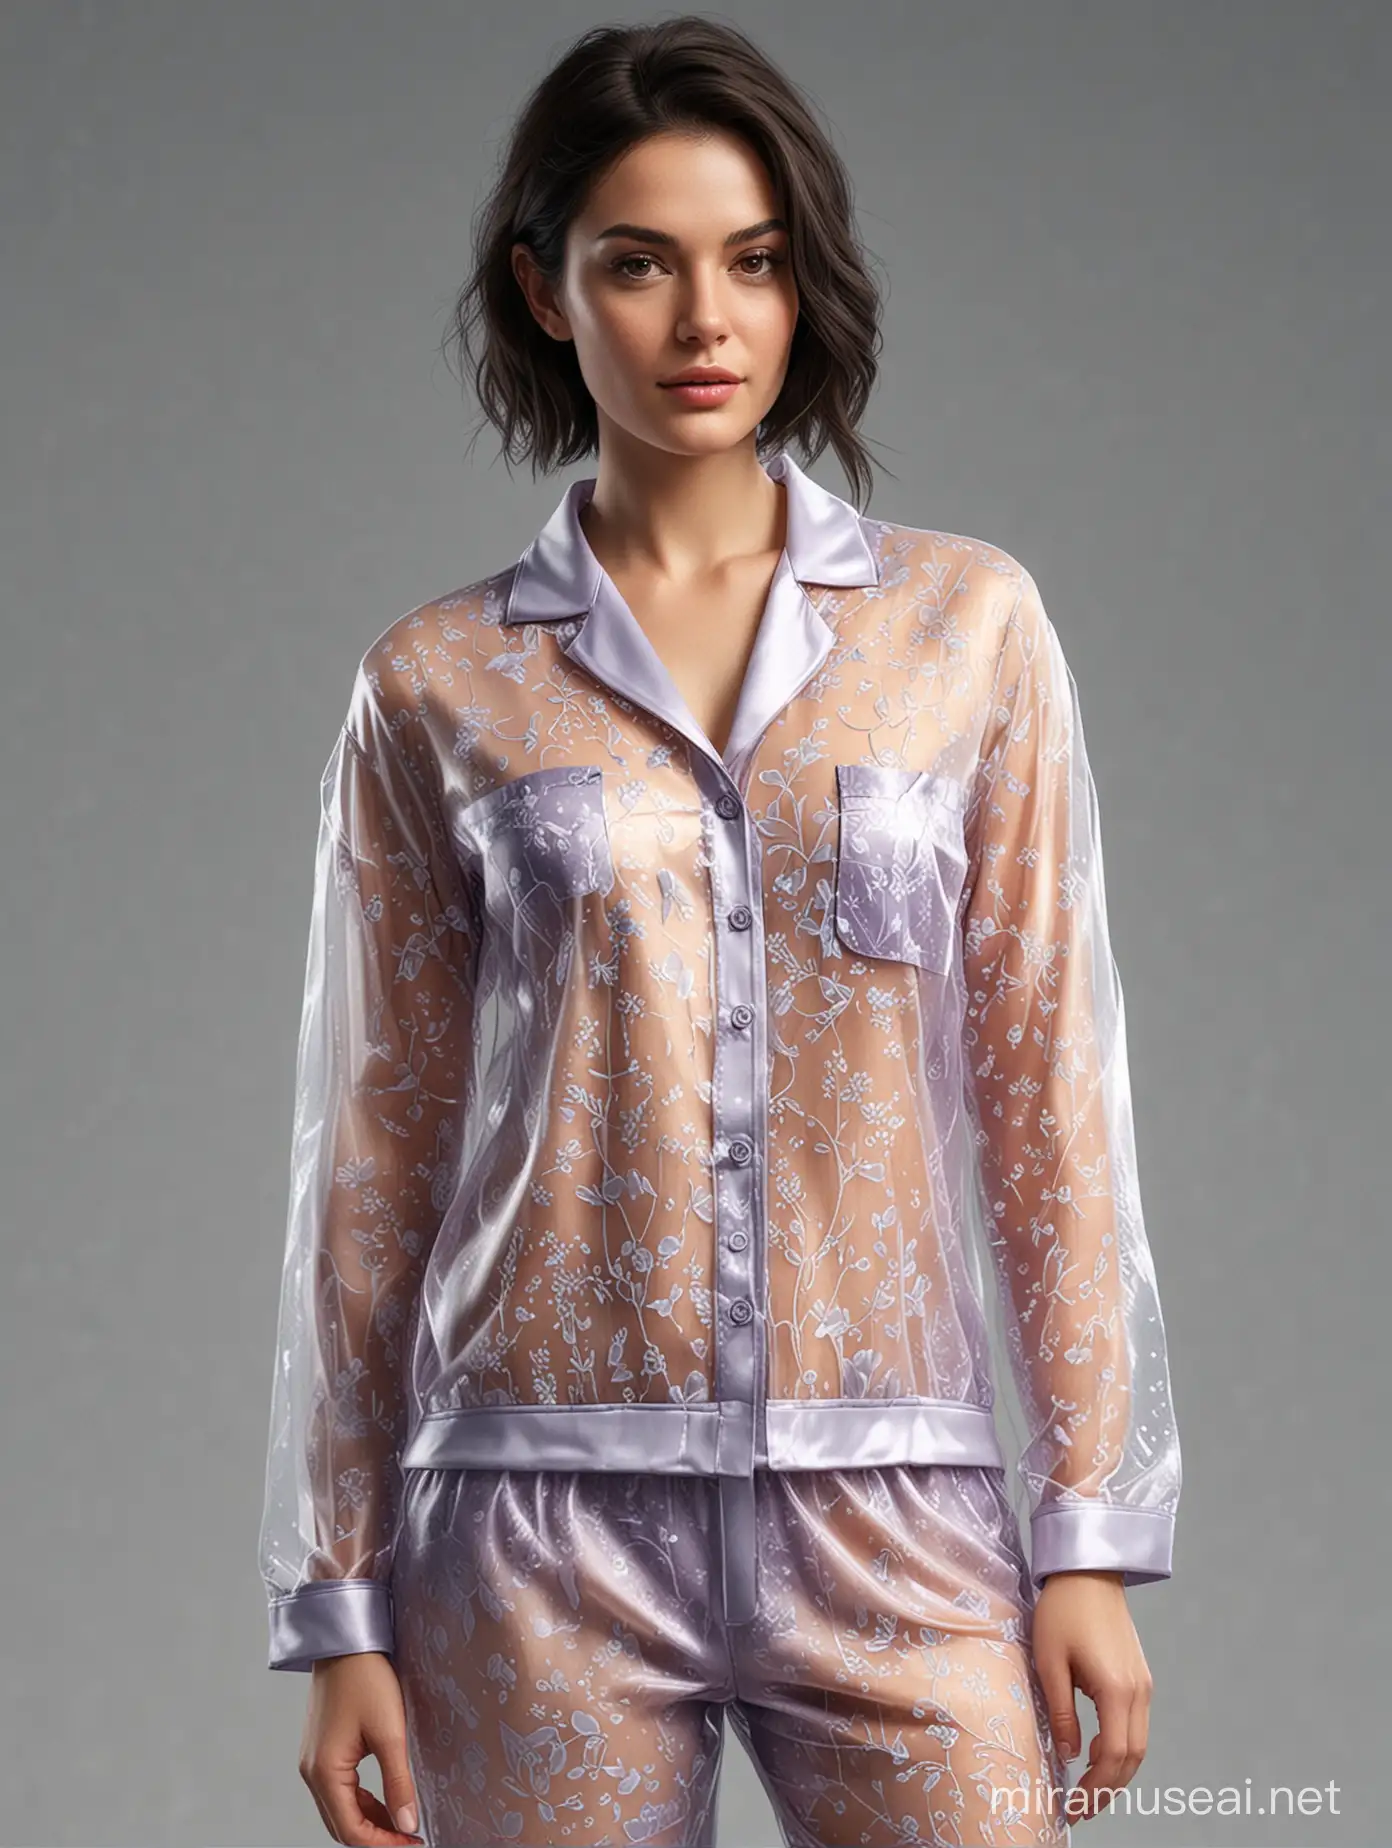 Elegant Woman in Vibrant Transparent Pajamas Photorealistic Fashion Portrait